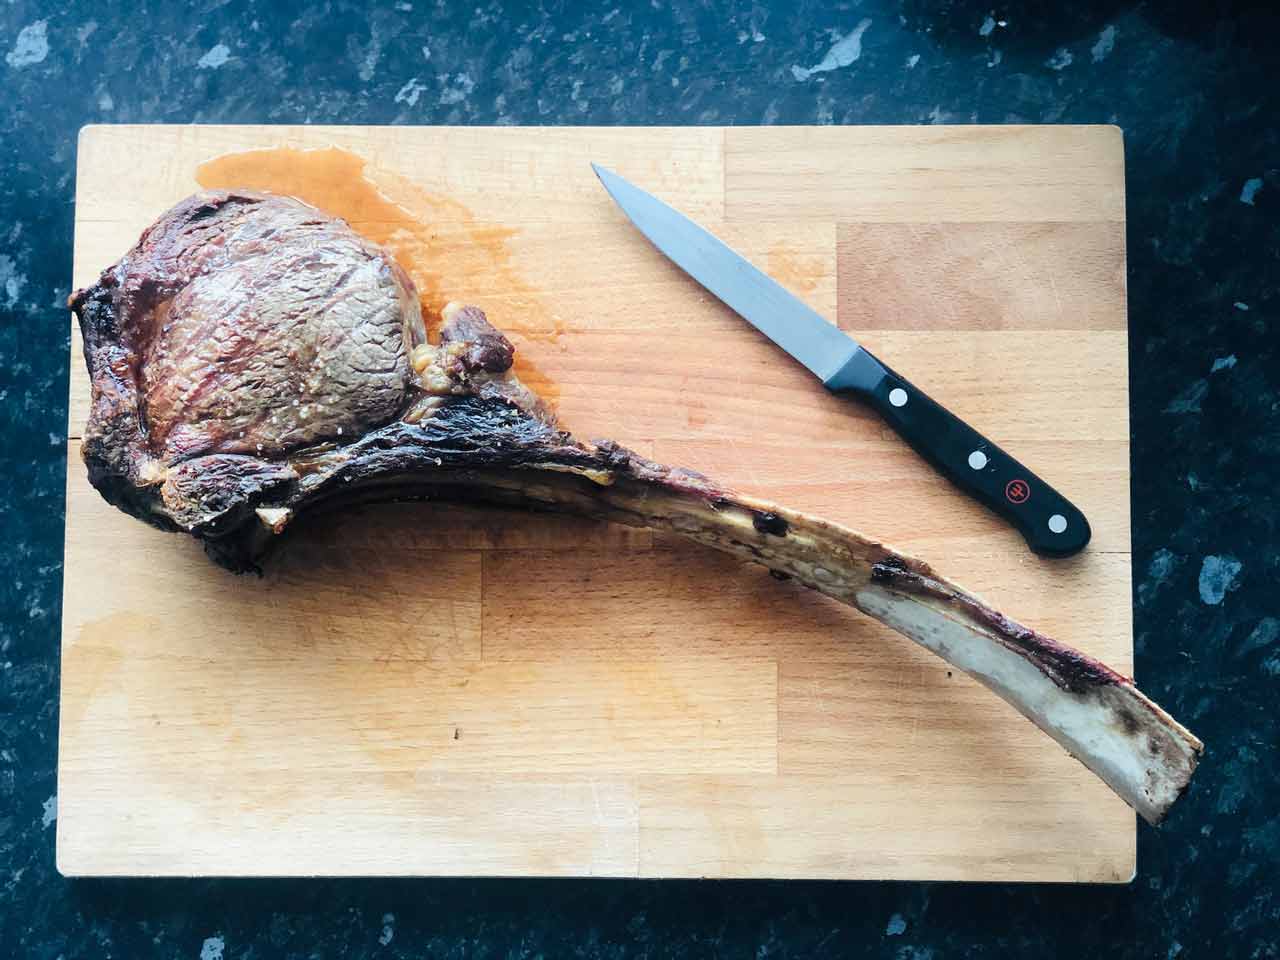 A tomahawk steak resting on a cutting board